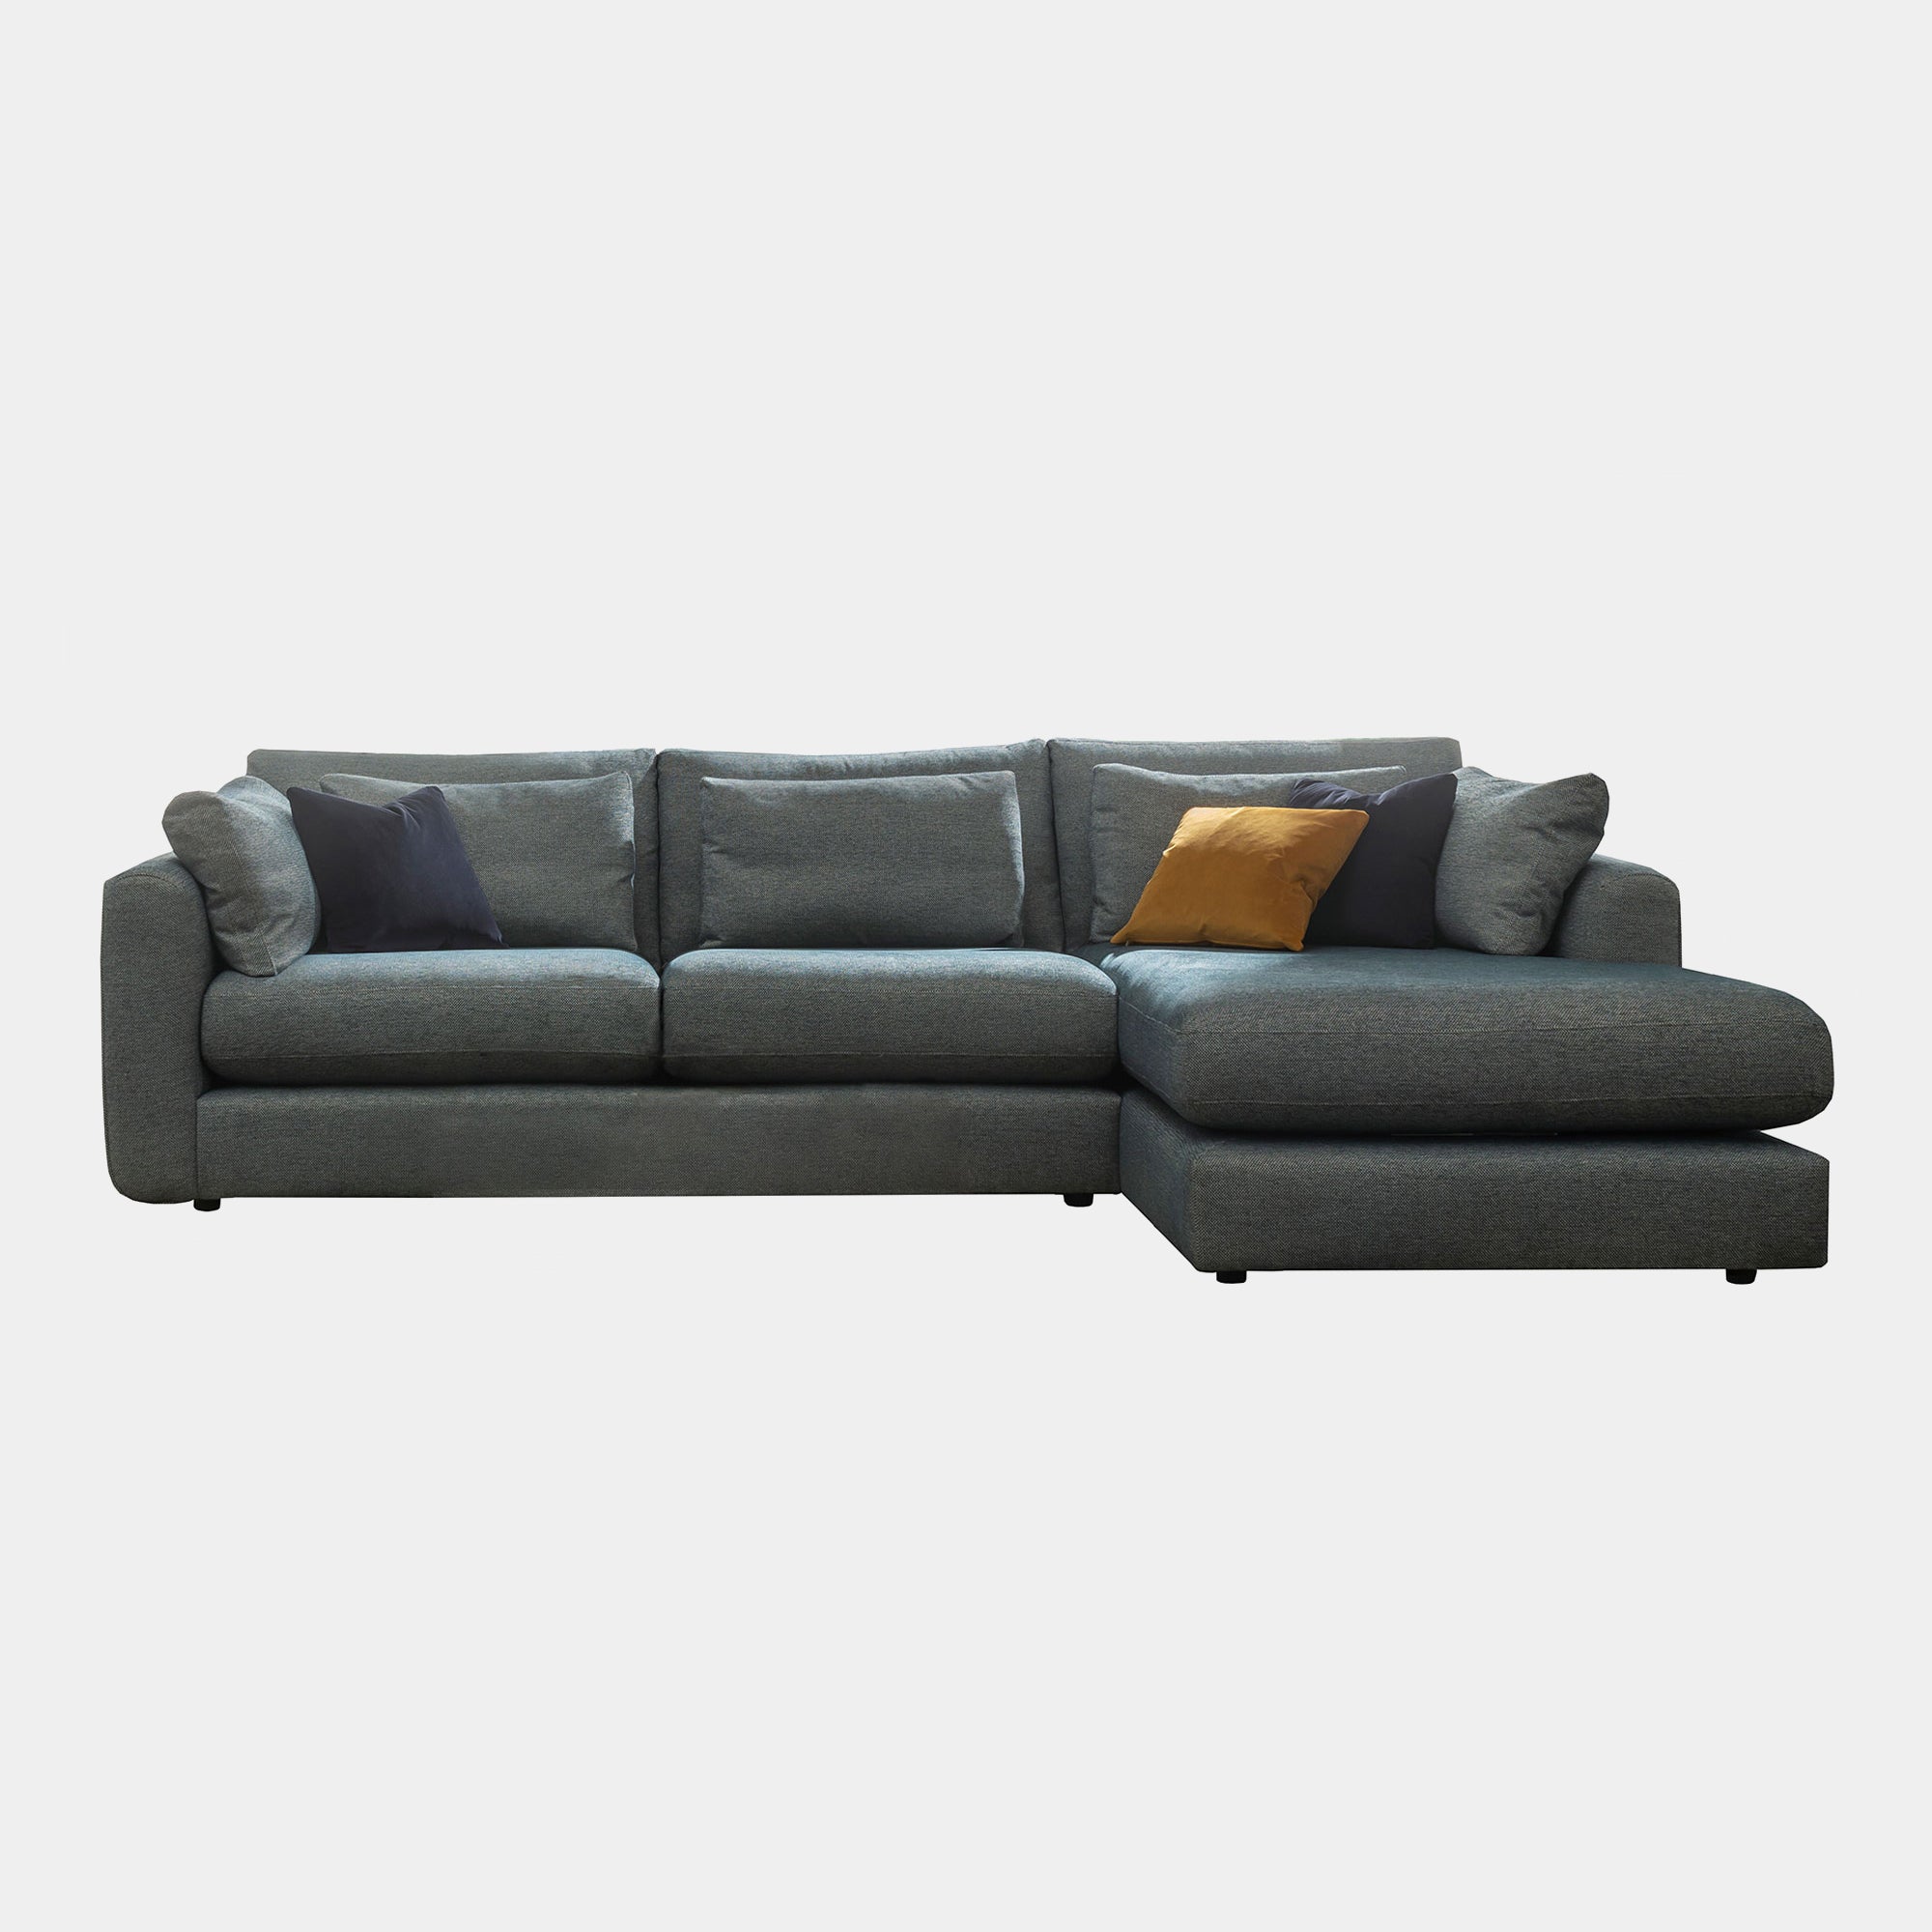 Jenson - RHF Chaise Sofa In Fabric Cat G